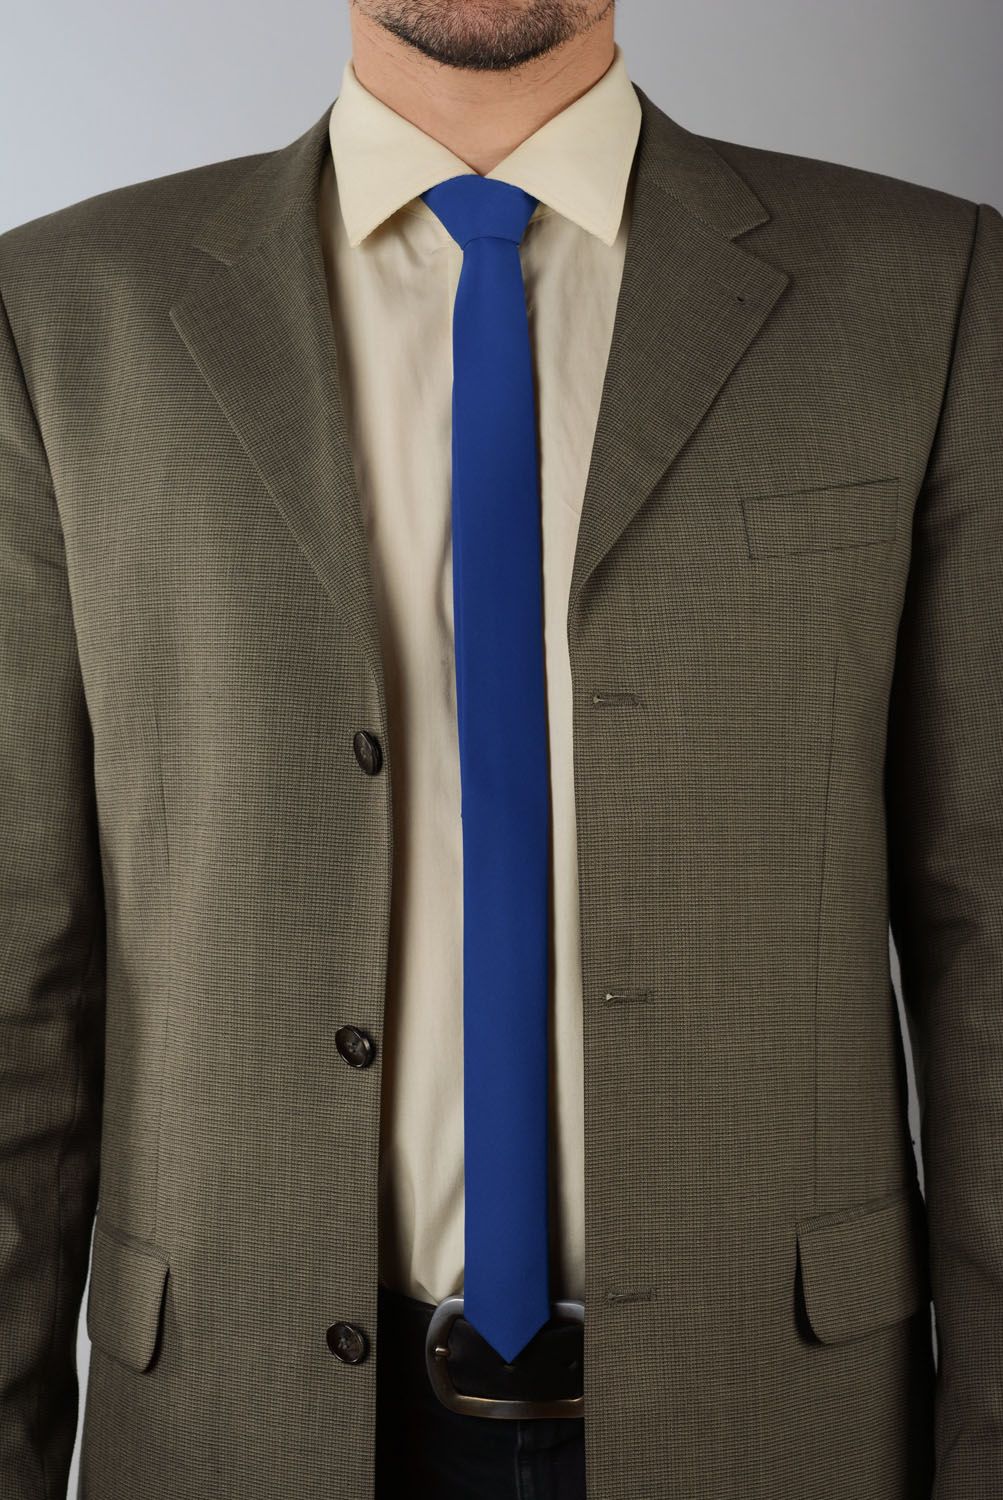 Cravate fine bleue faite main  photo 1